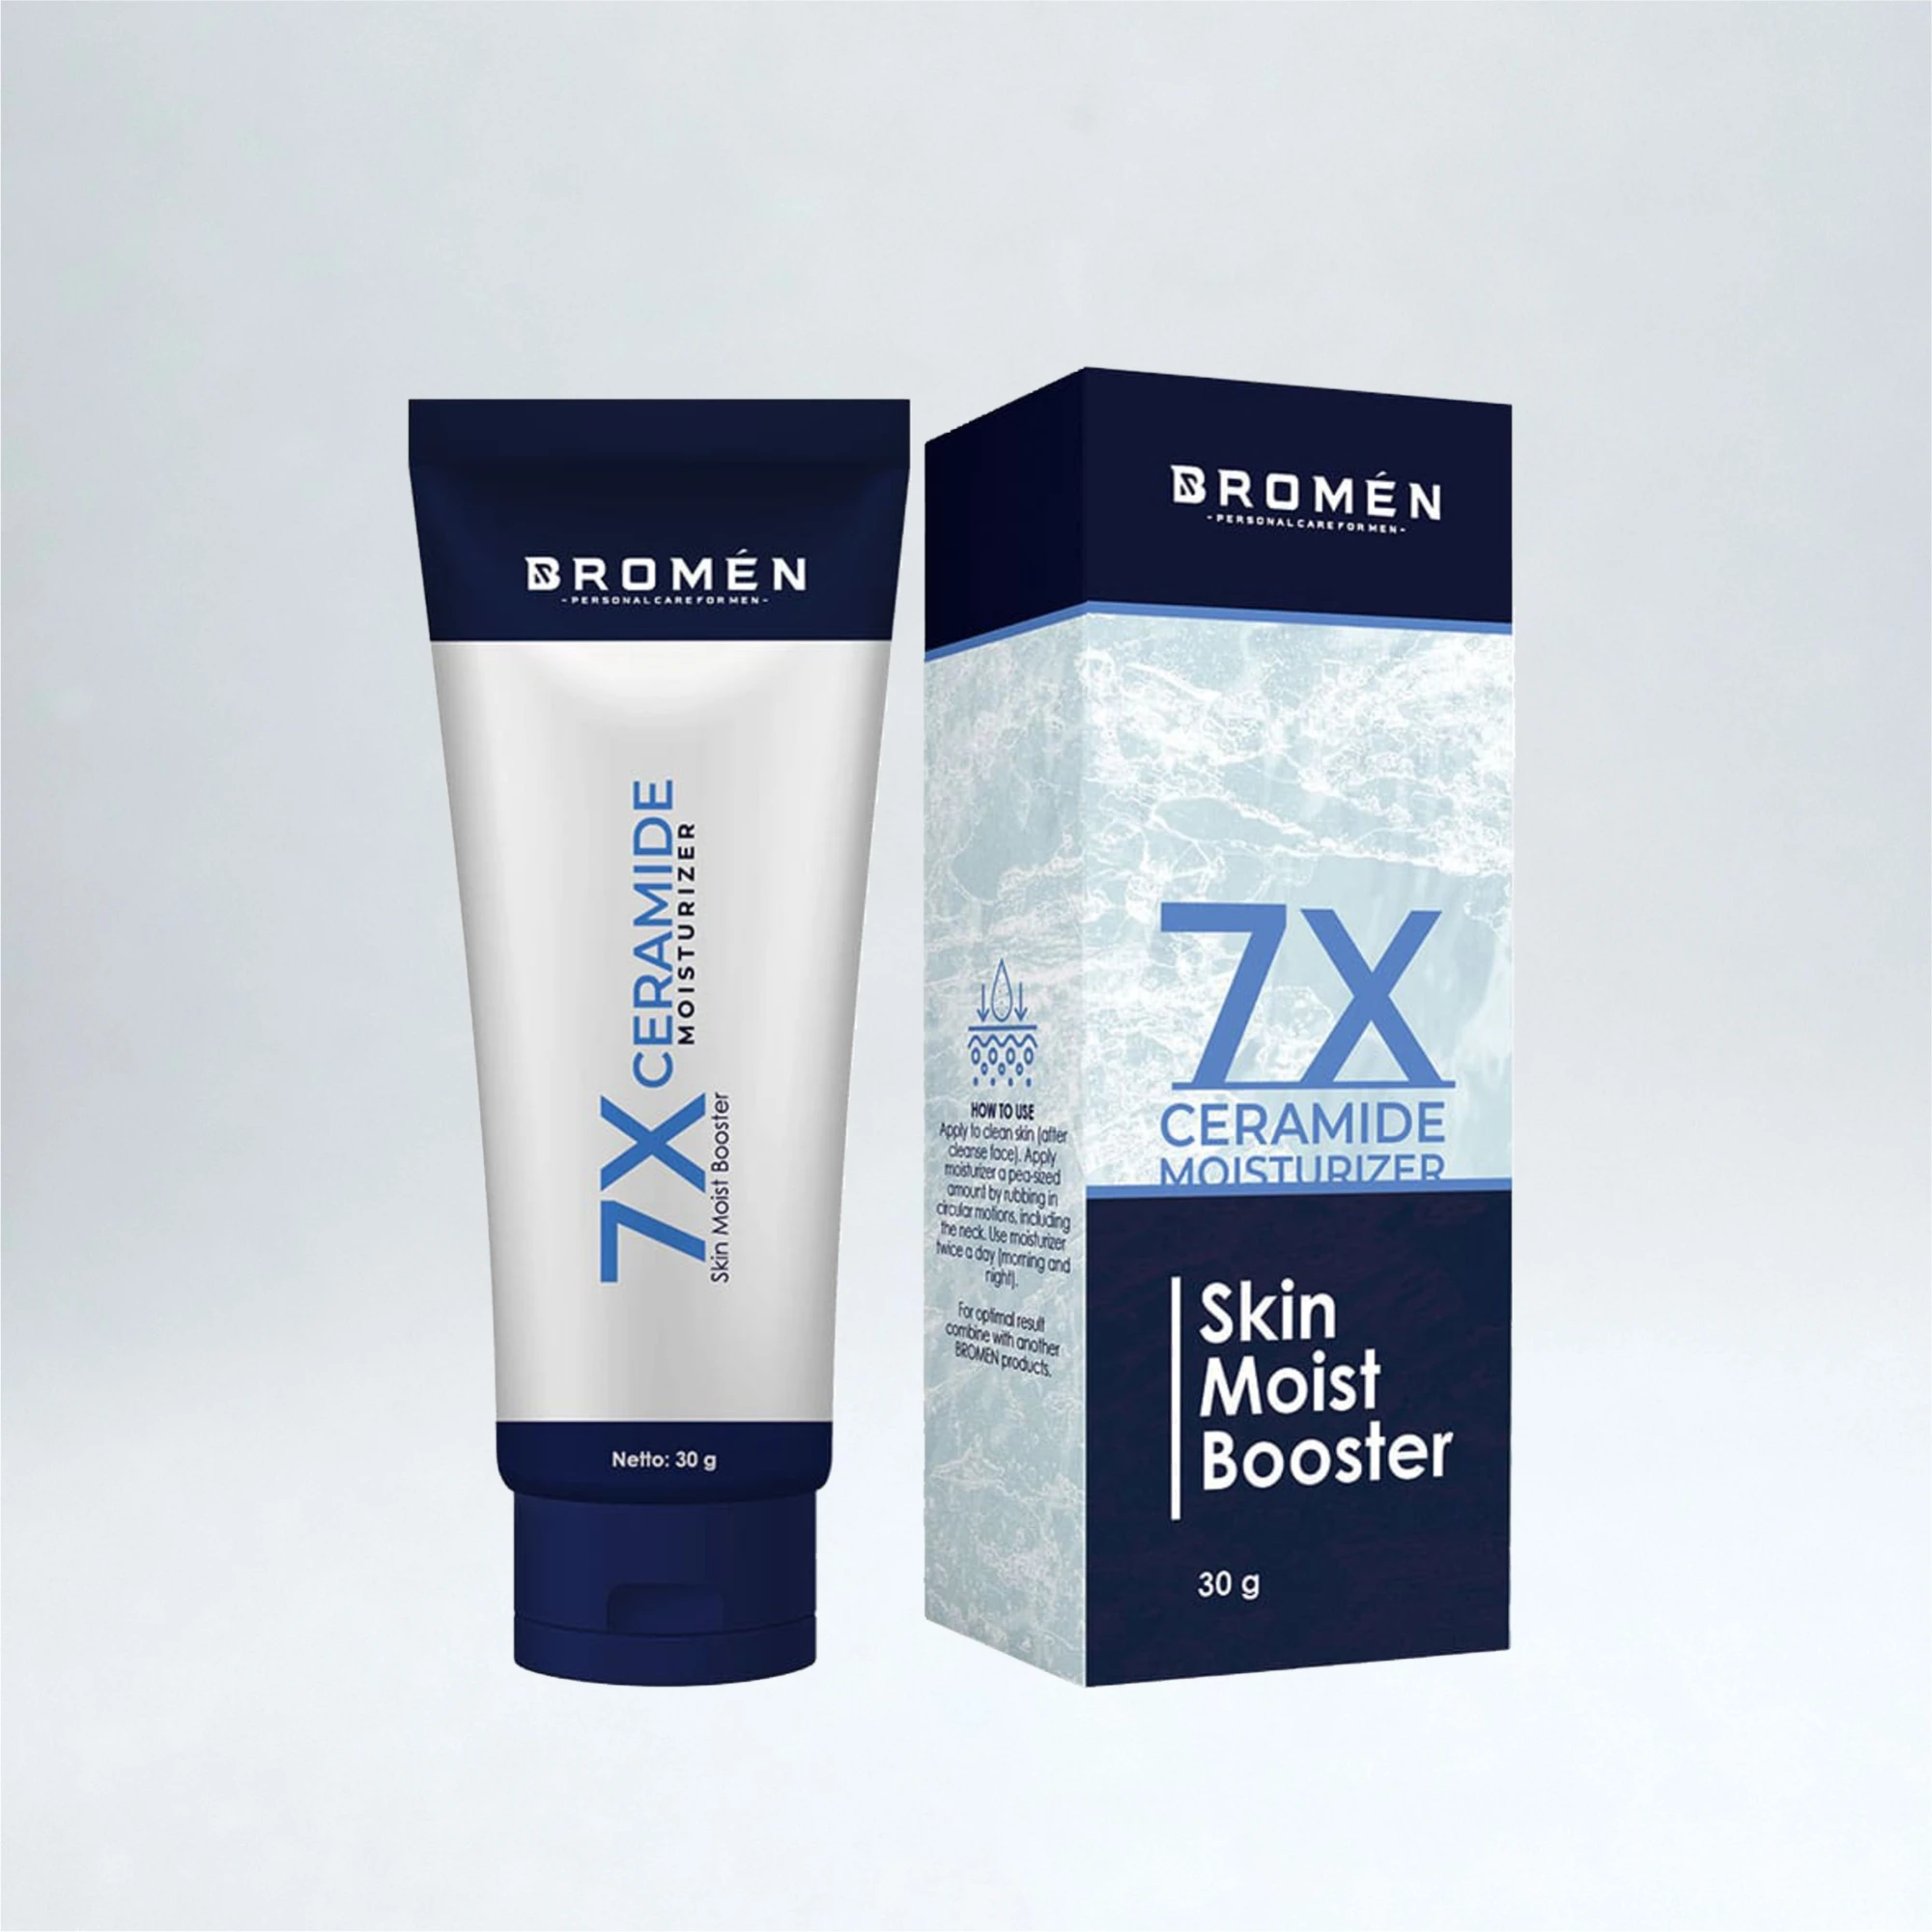 bromen 7x ceramide moisturizer with box